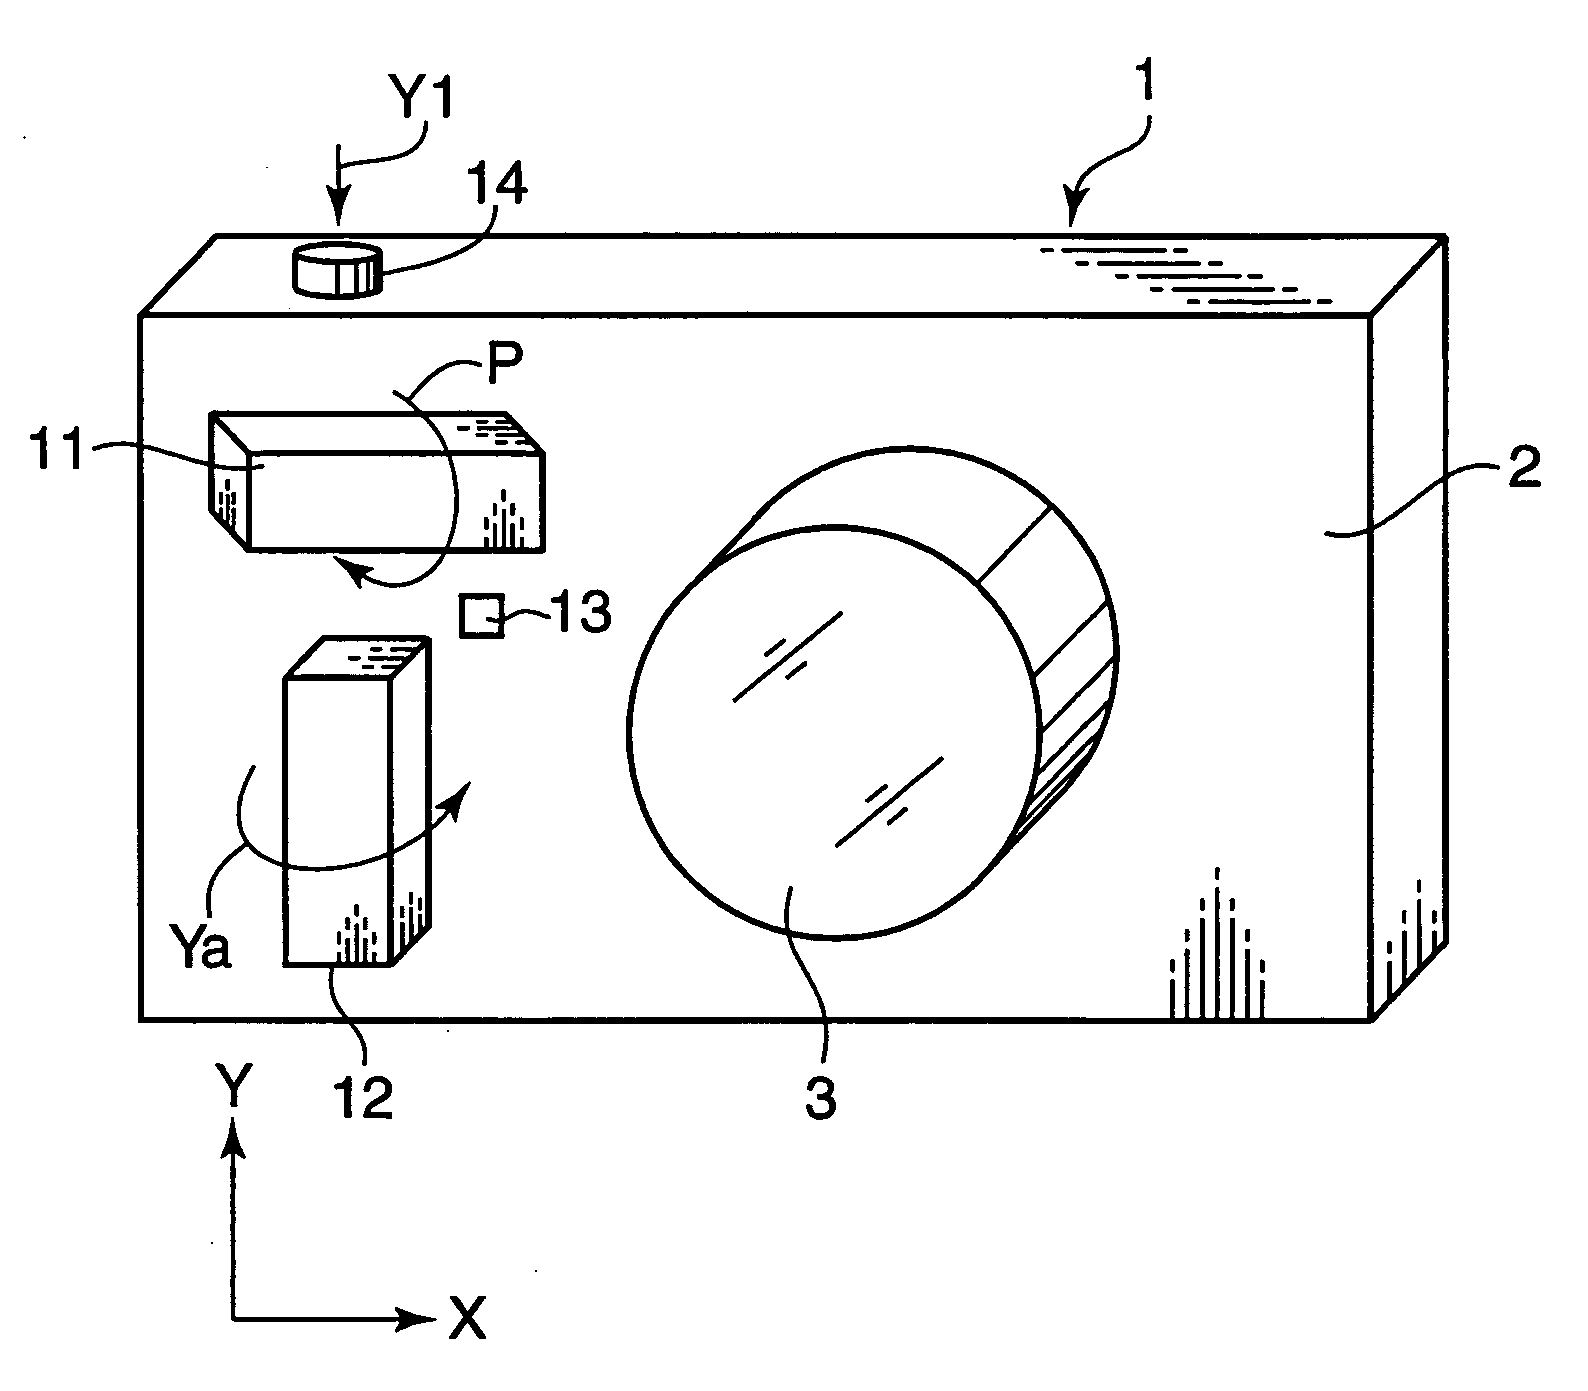 Image sensing apparatus